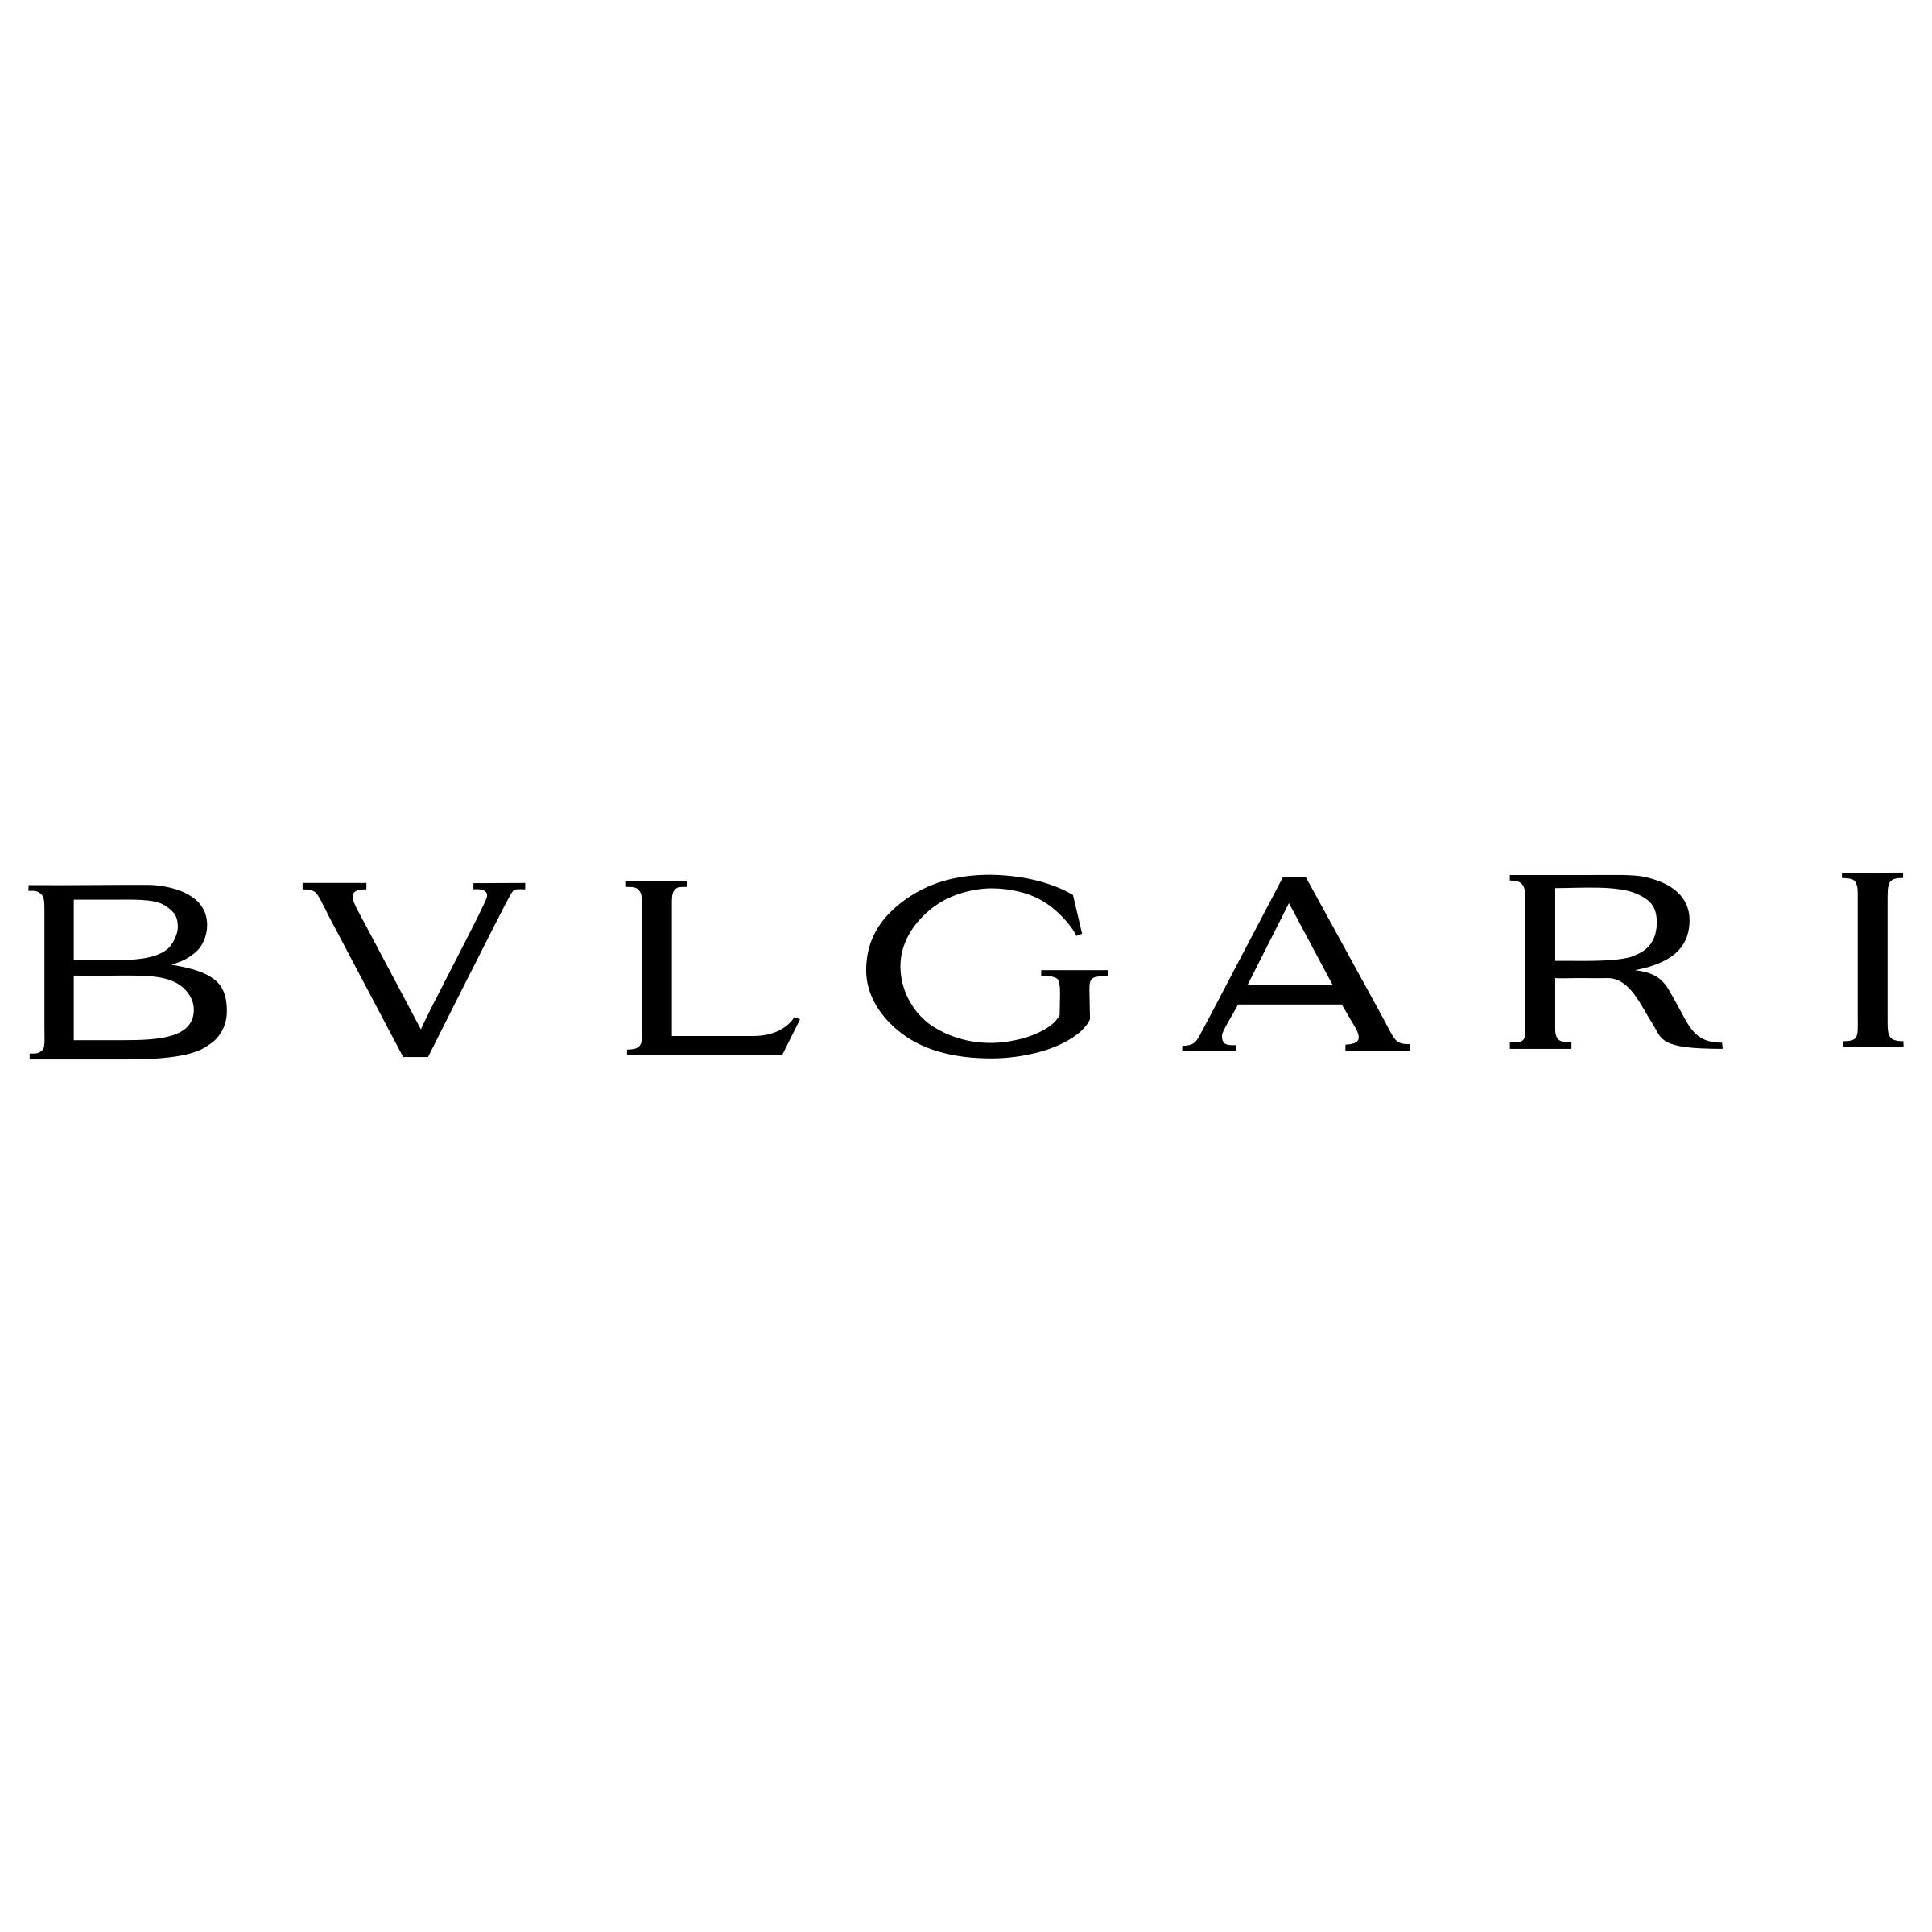 bvlgari-logo-black-and-white.png